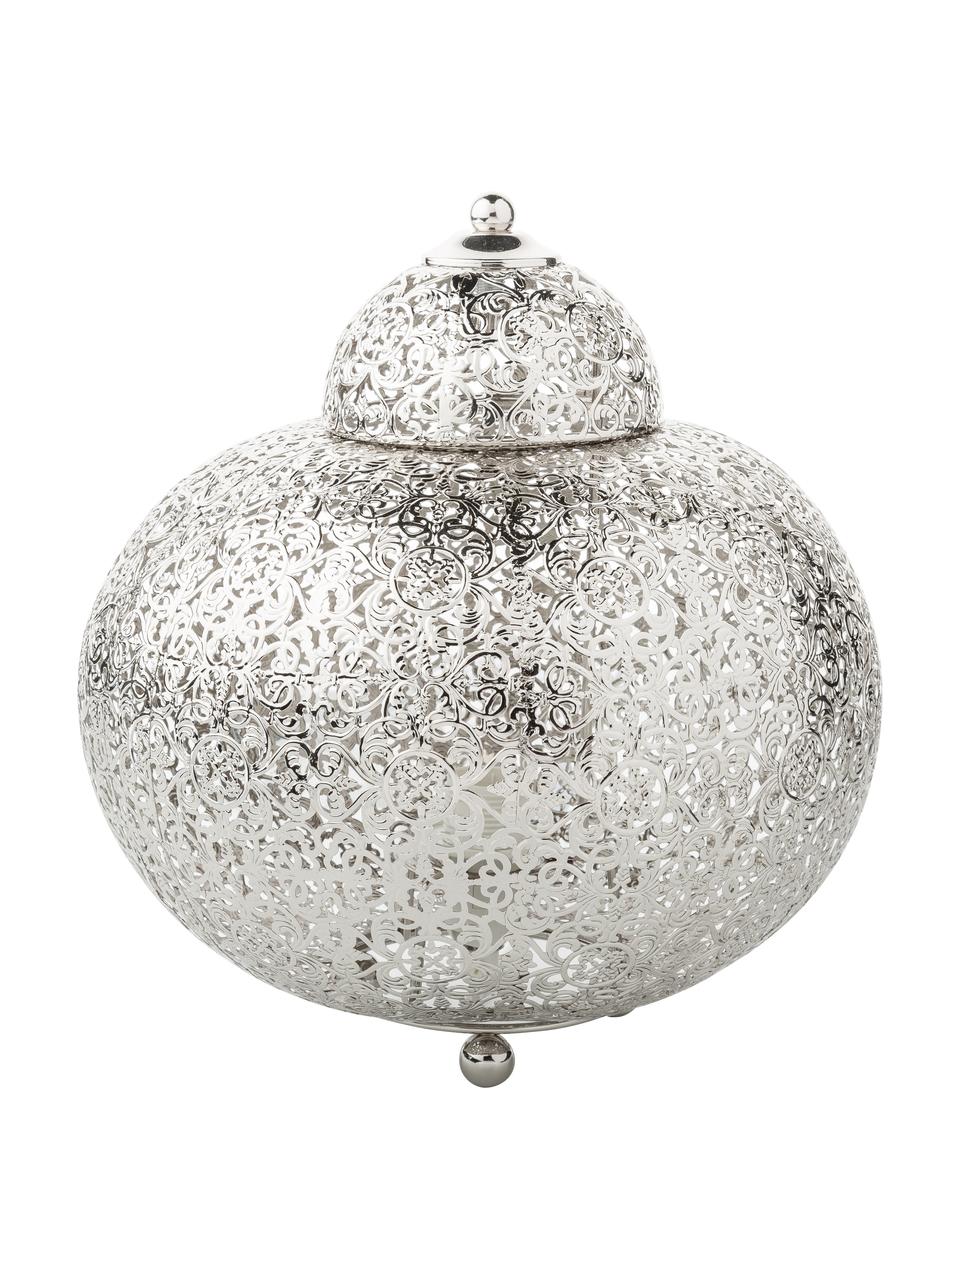 Nachtlampje Marocco in zilverkleur, Nikkel, Nikkelkleurig, Ø 26 x H 26 cm